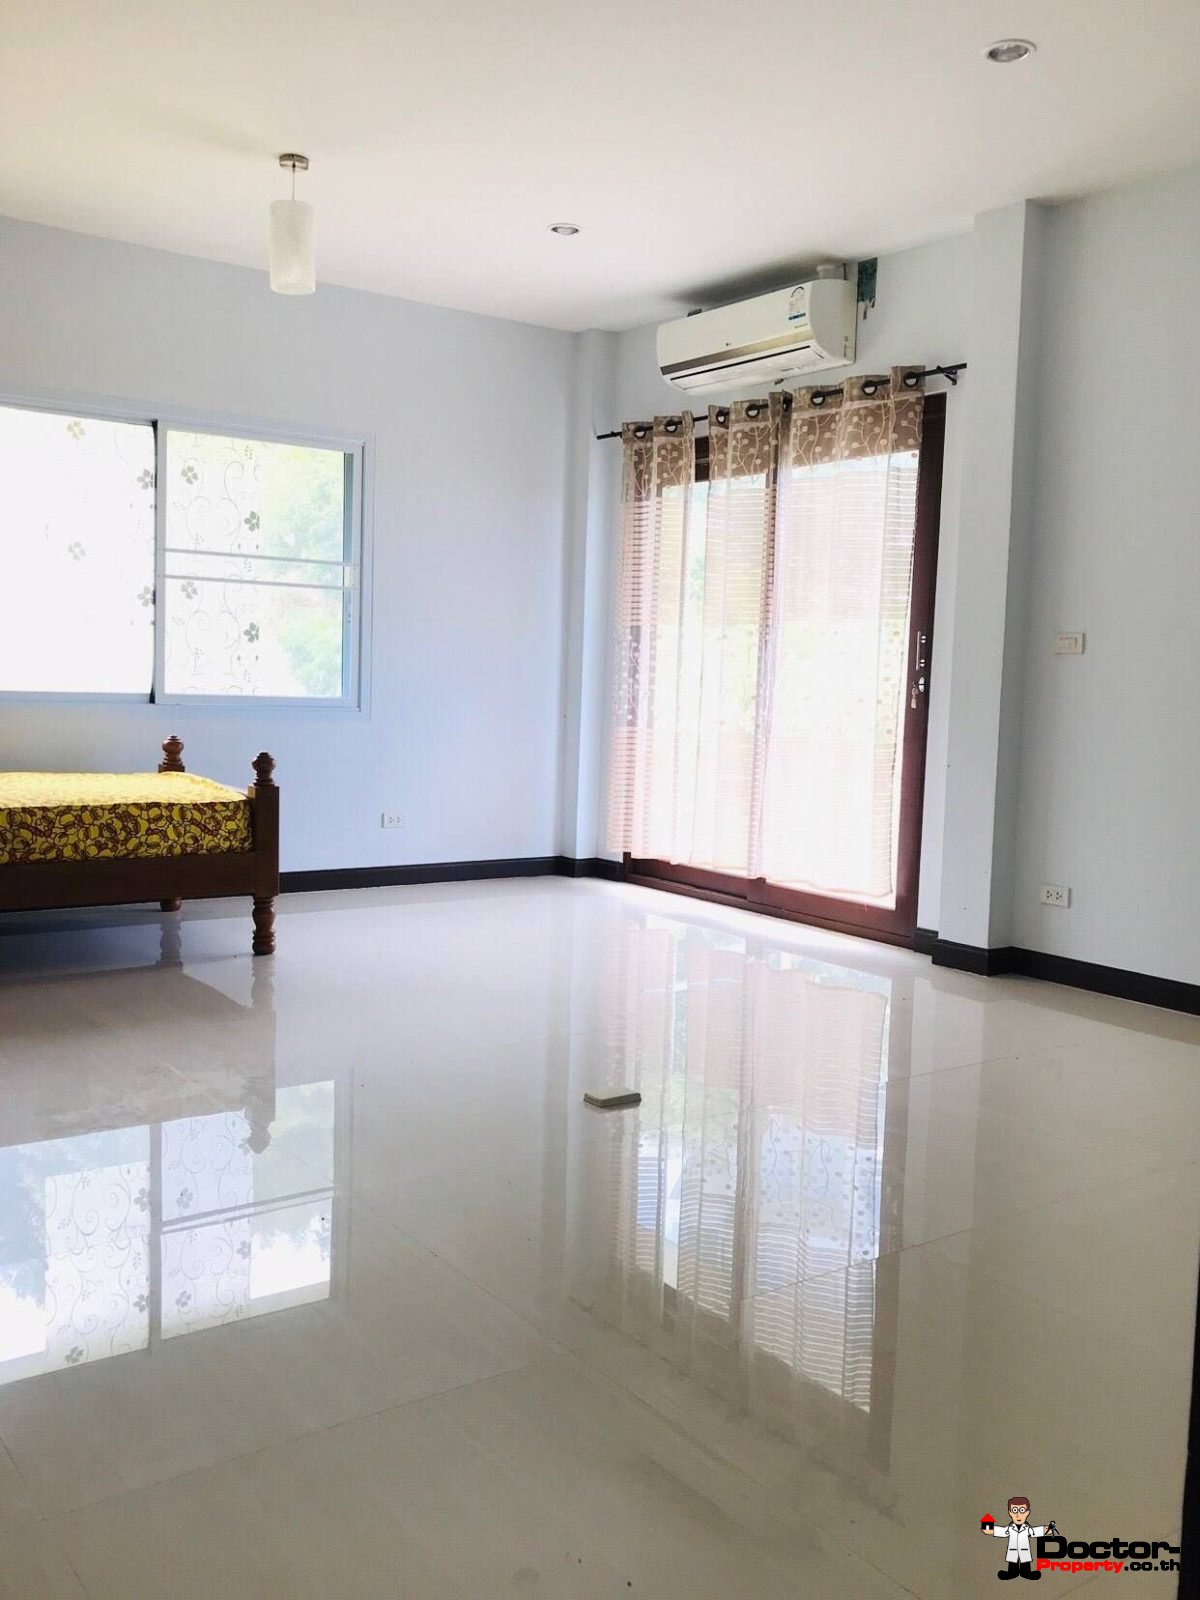 6 Bedroom Sea View Villa in Plai Laem, Koh Samui - For Sale